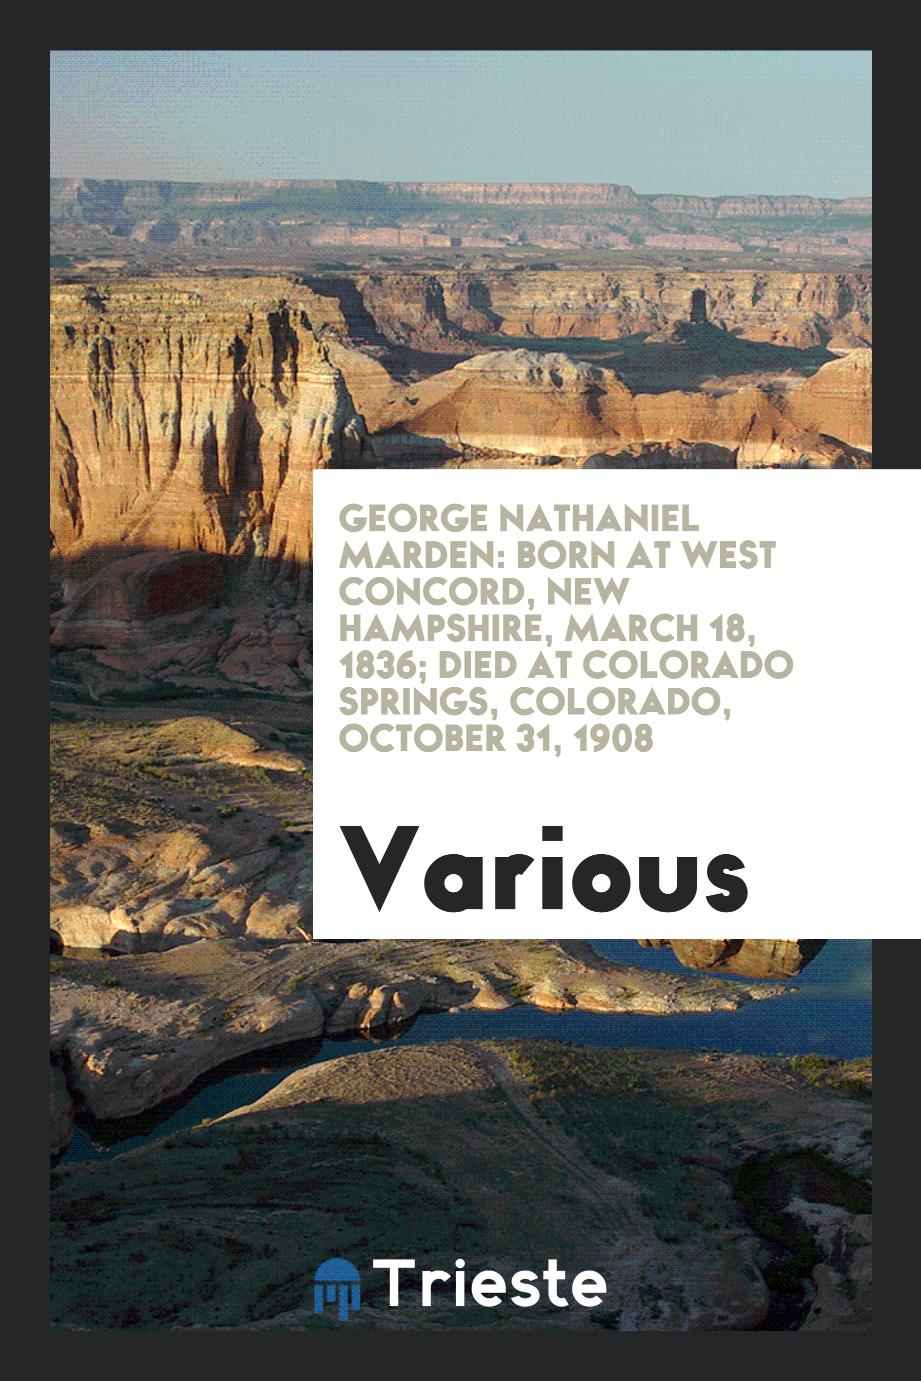 George Nathaniel Marden: Born at West Concord, New Hampshire, March 18, 1836; Died at Colorado Springs, Colorado, October 31, 1908